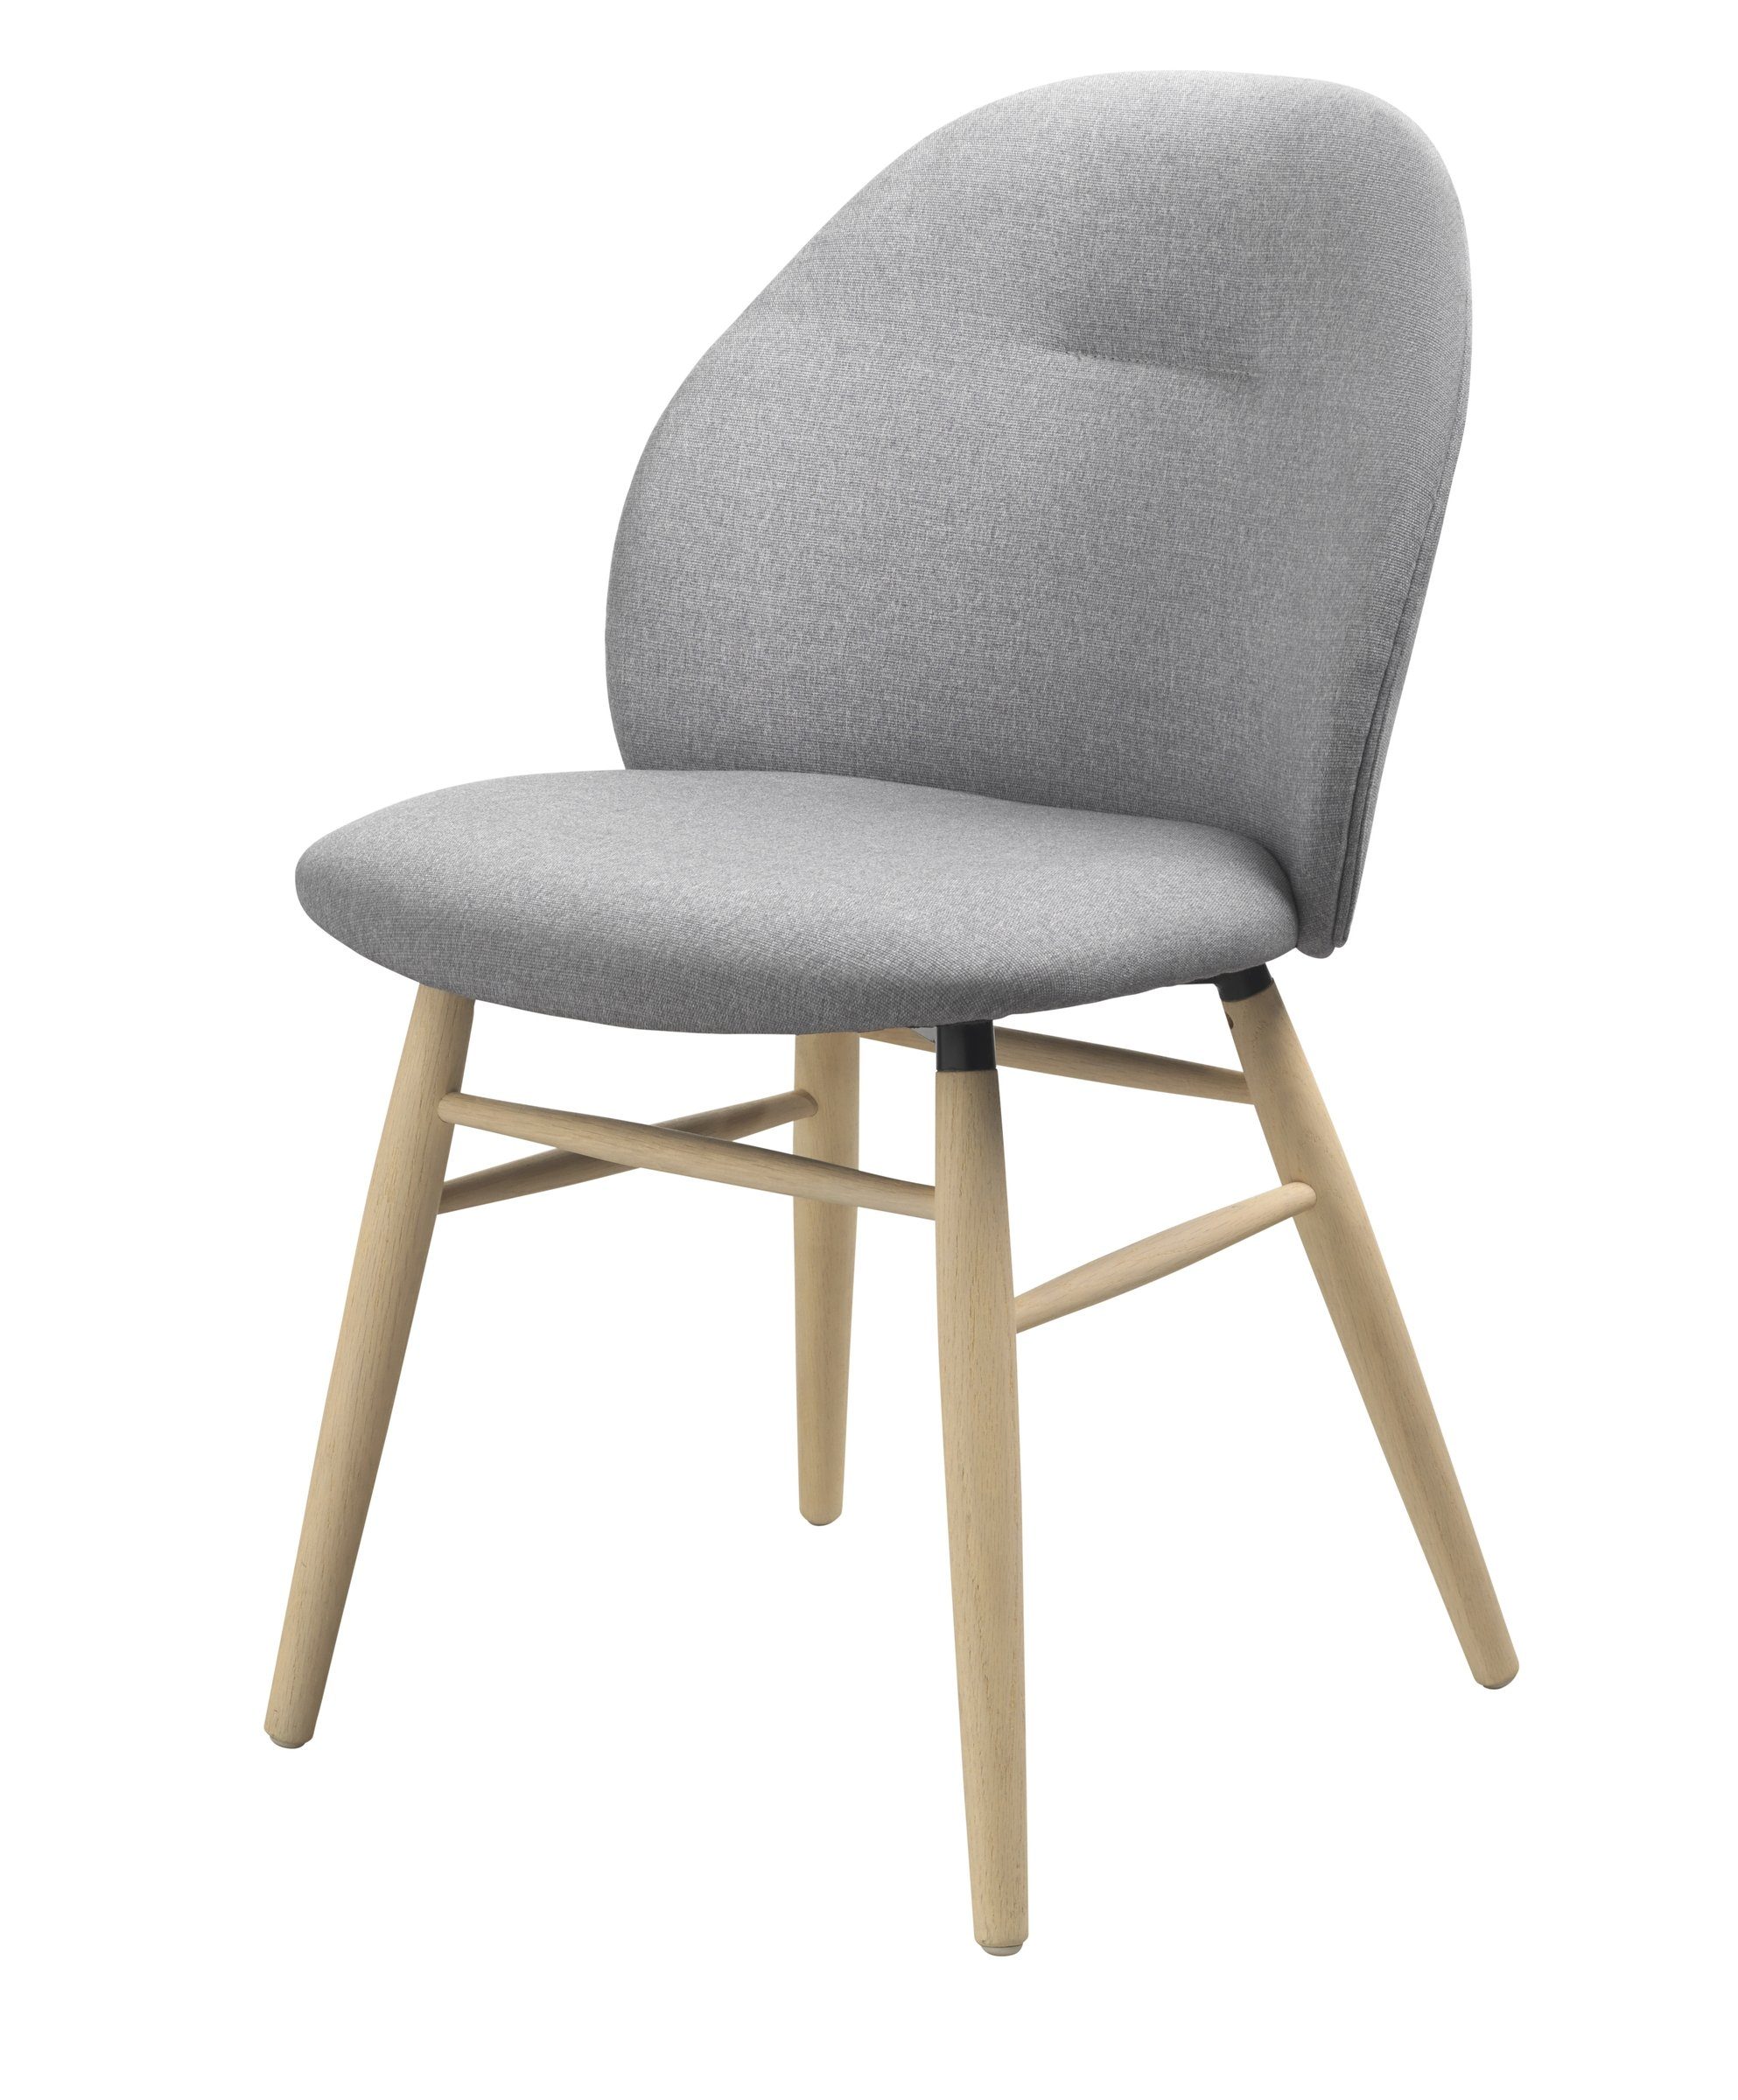 möbelando Stuhl TENO (B/H/T: 50x83x58 cm), aus Massivholz/Stoff in grau | Stühle